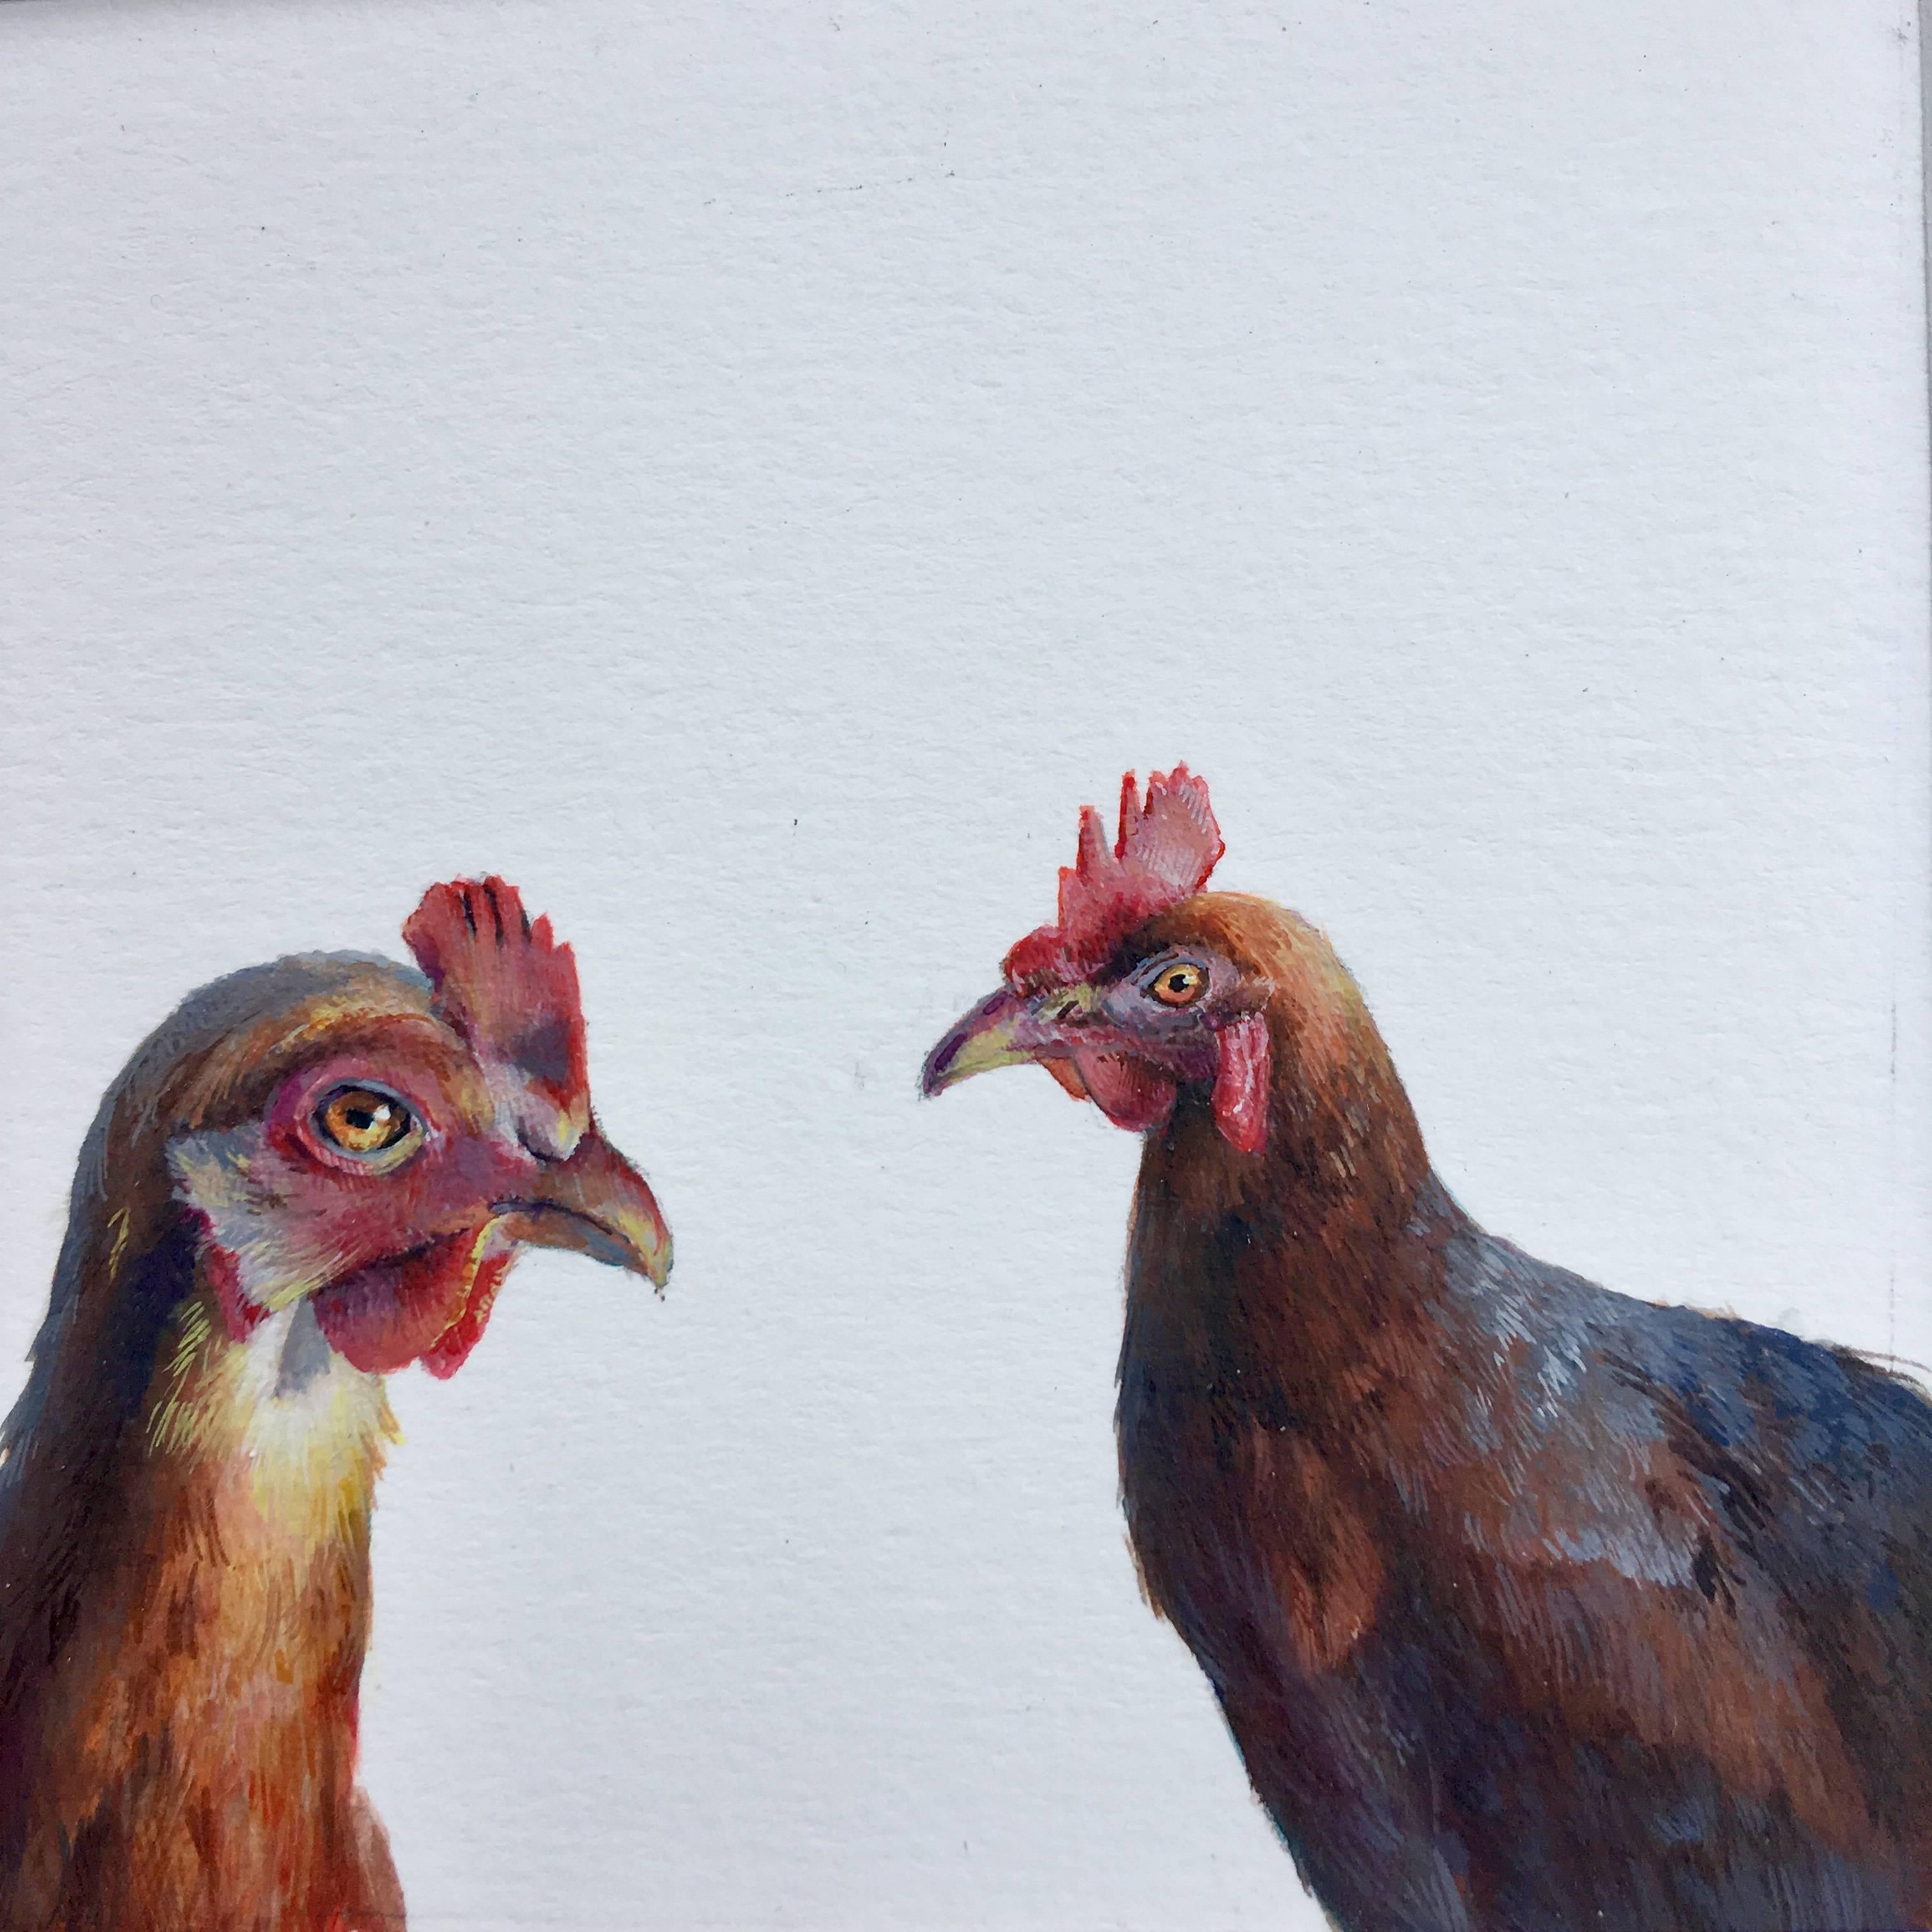 Dina Brodsky Animal Art - Dina Brodksy, Chickens, realist gouache on paper animal miniature, 2018